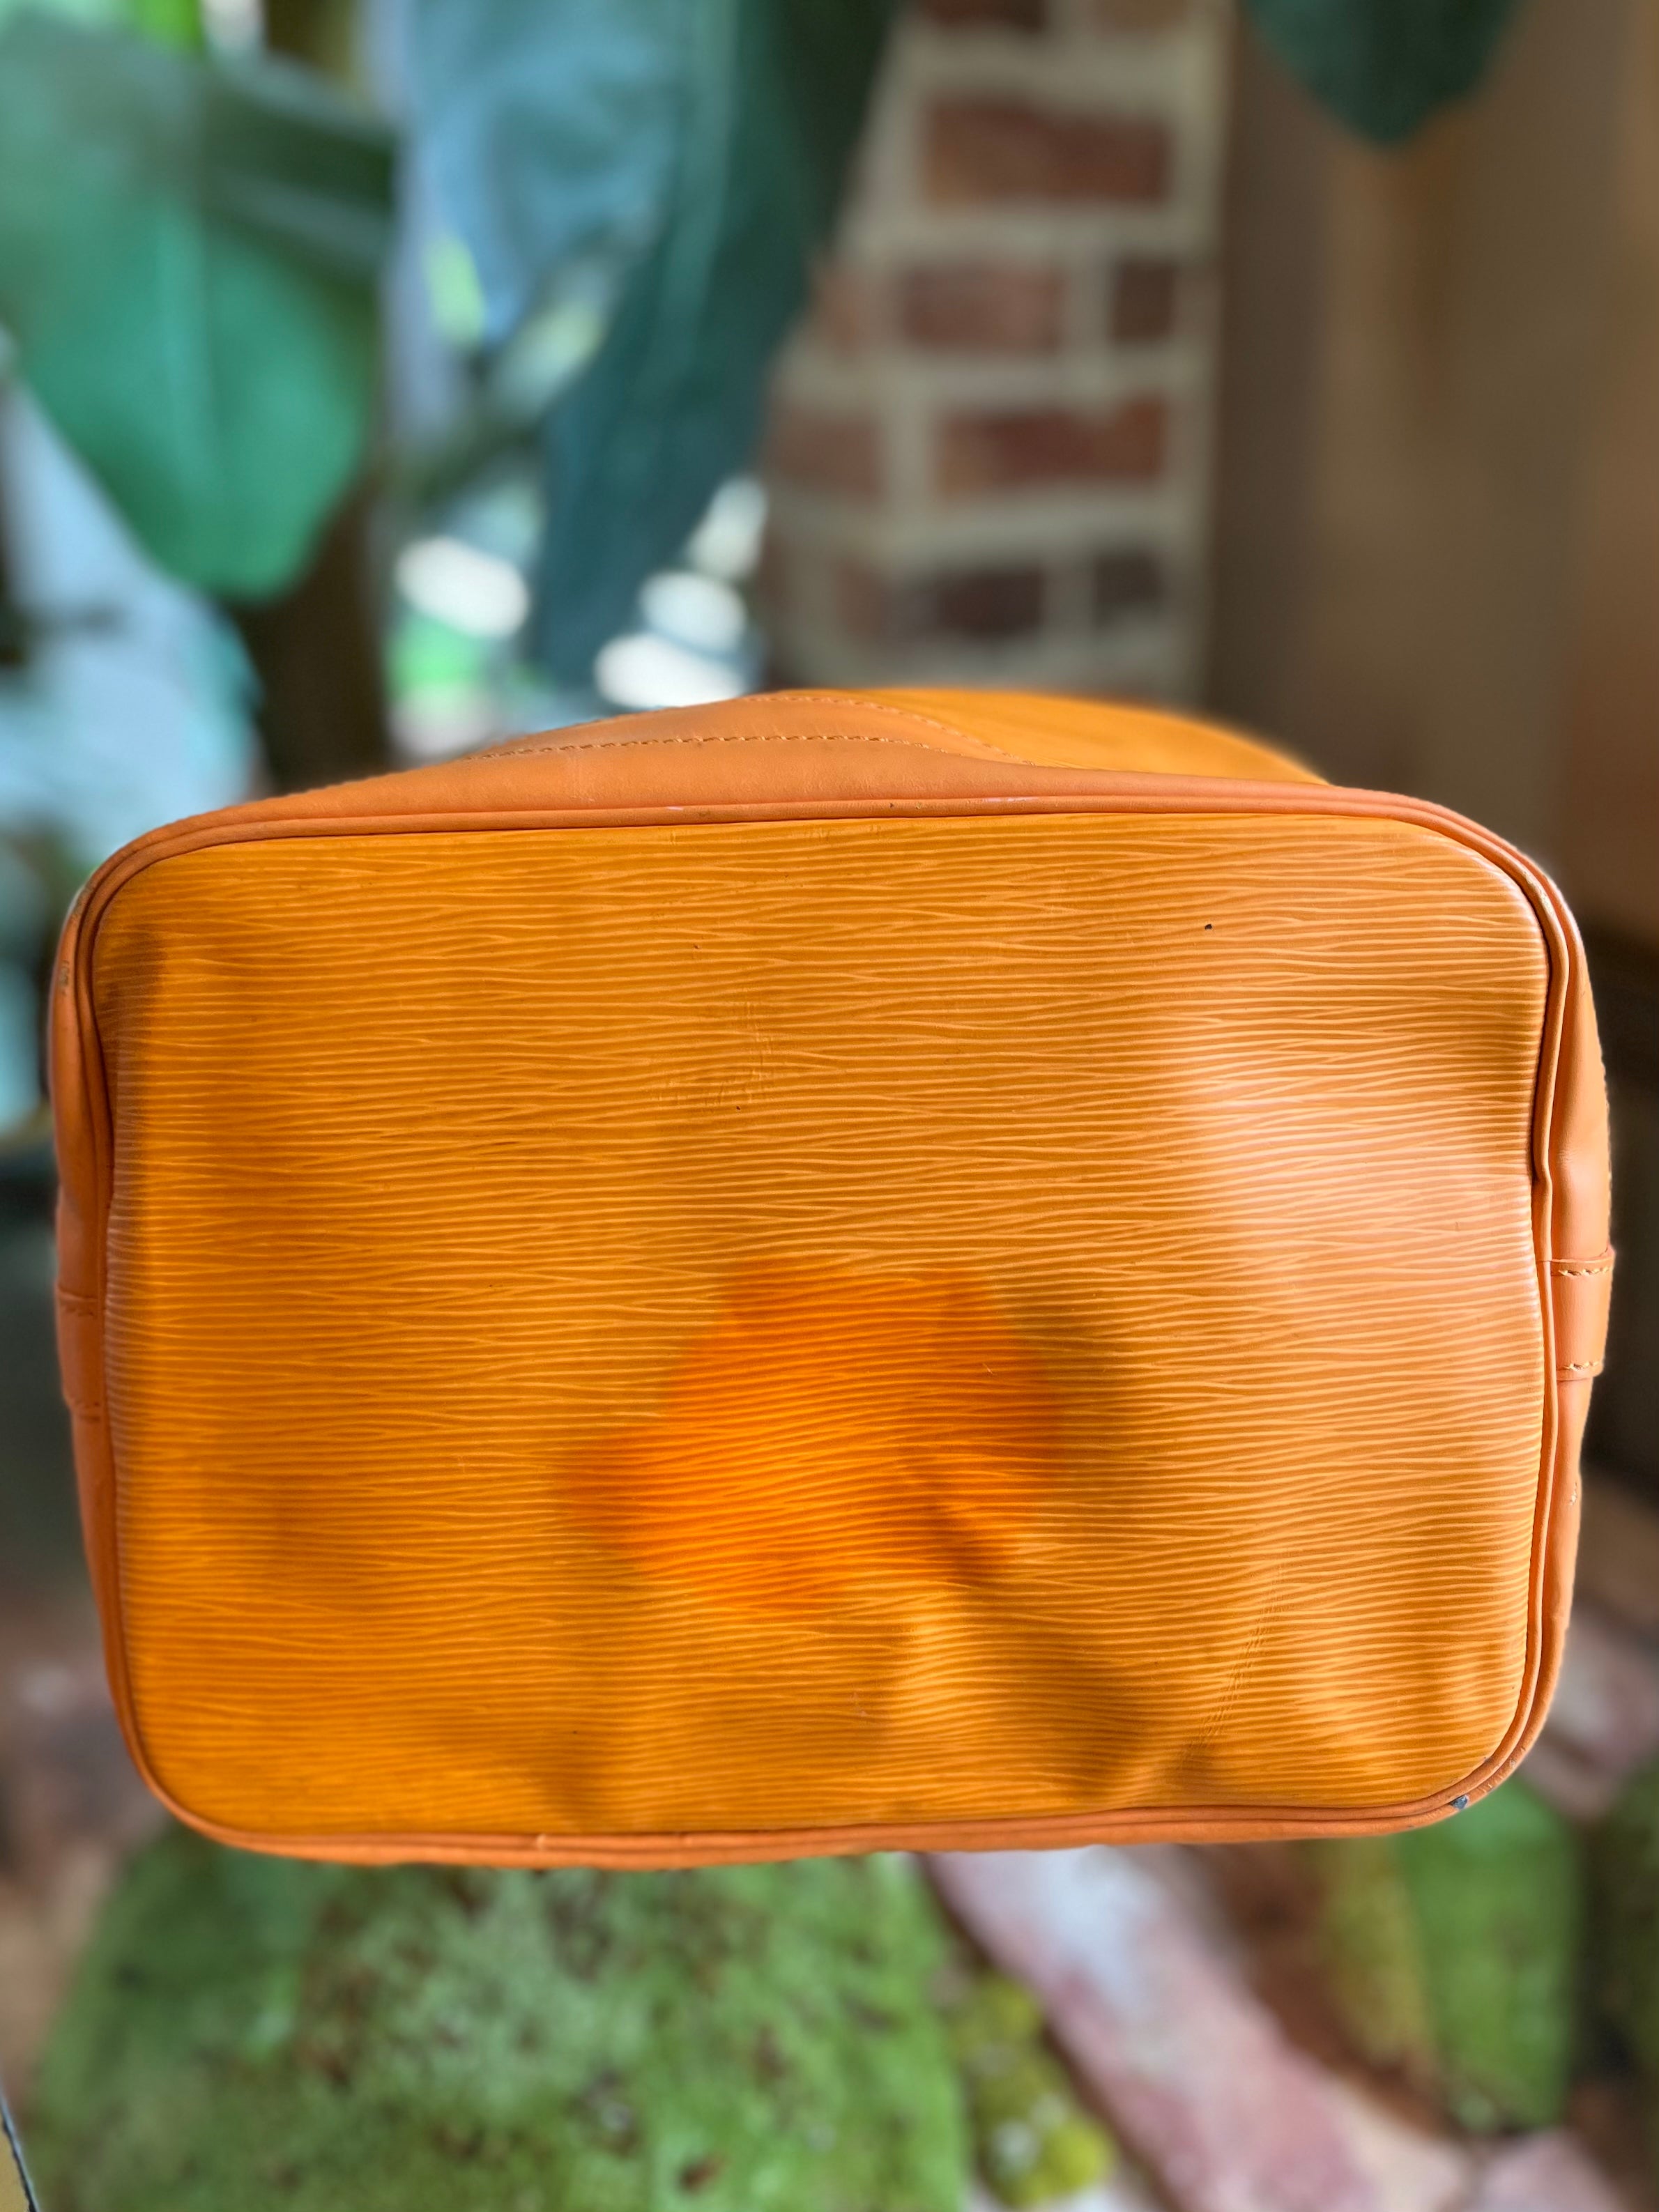 LOUIS VUITTON Orange Epi Leather Noe Bucket Bag - 14"x10"